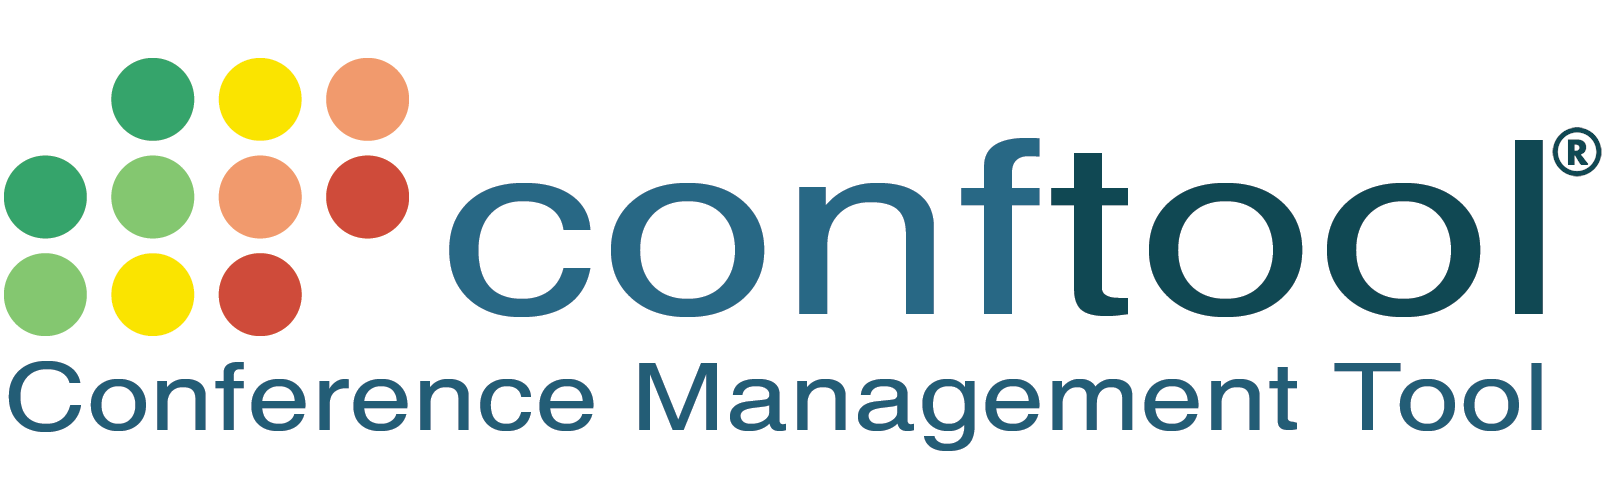 ConfTool Logo